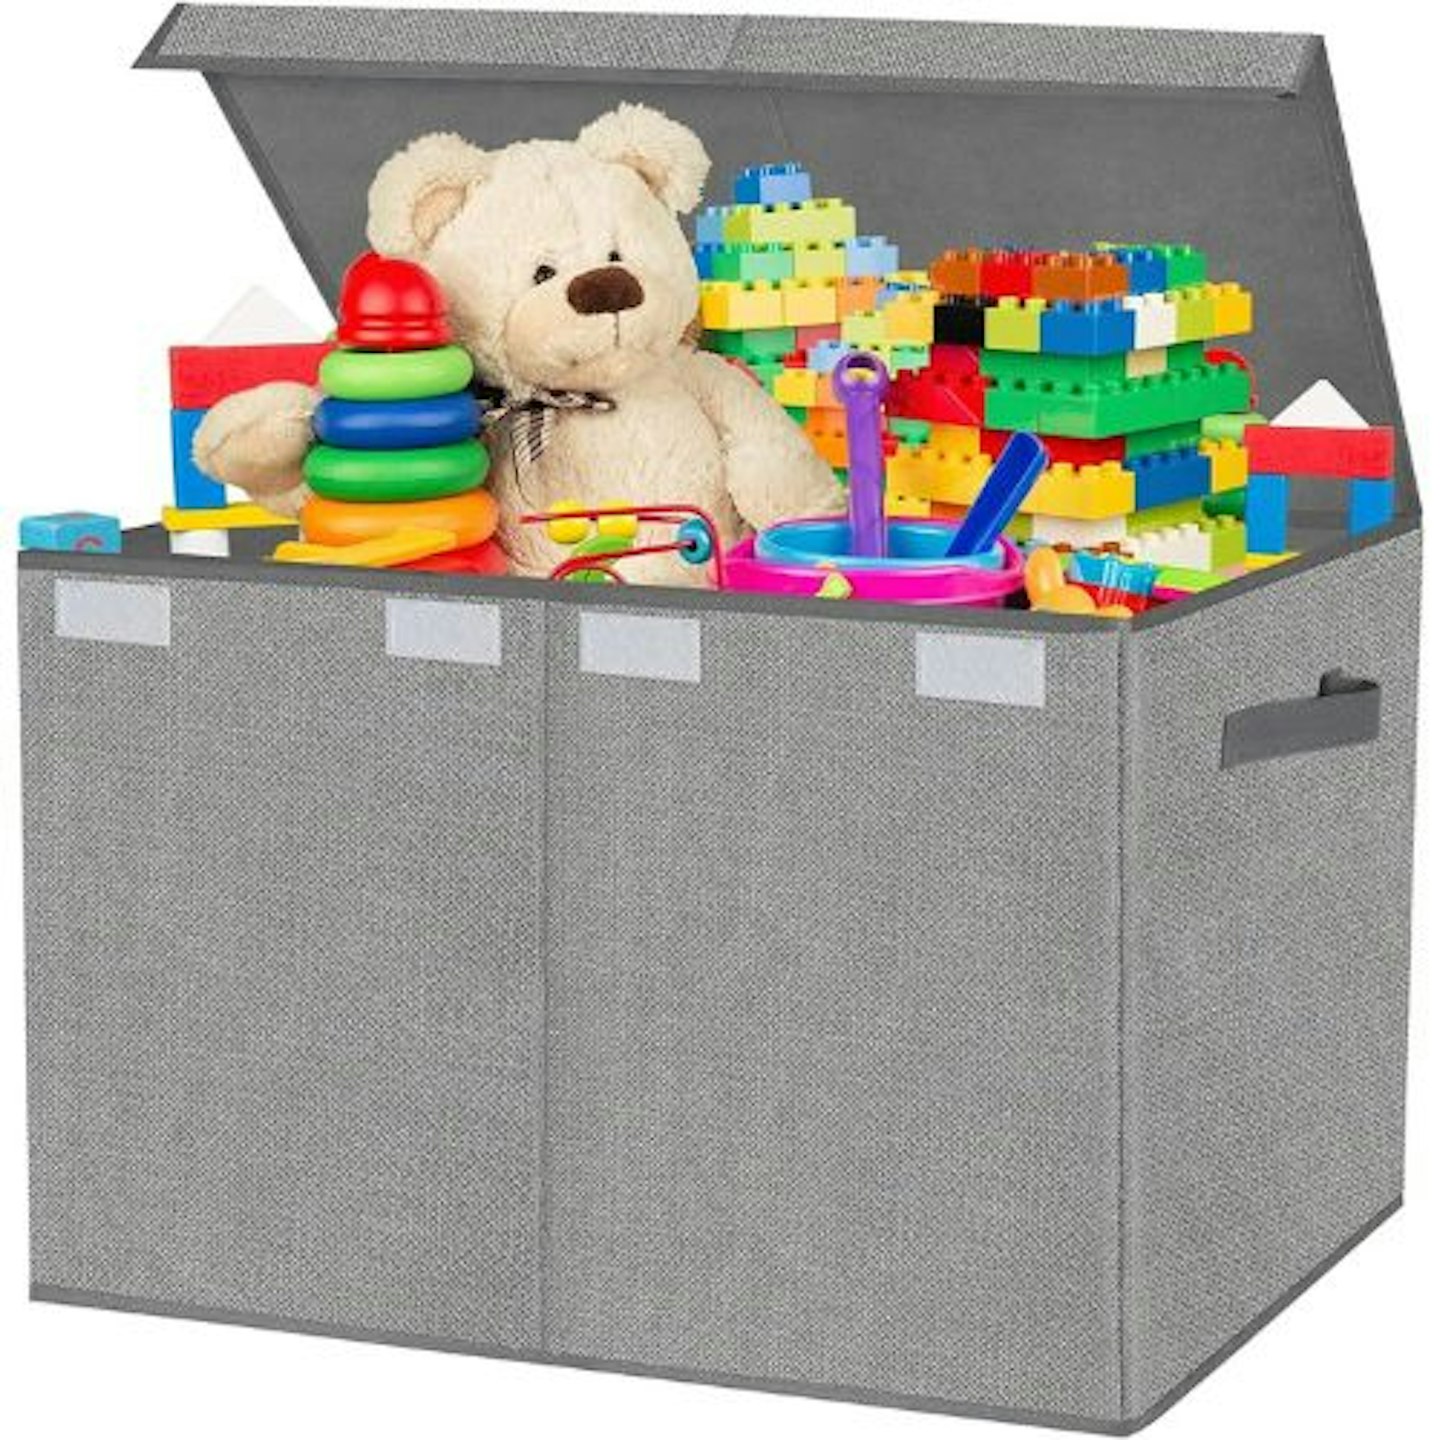 Ultimate Toy Box, Toy Storage